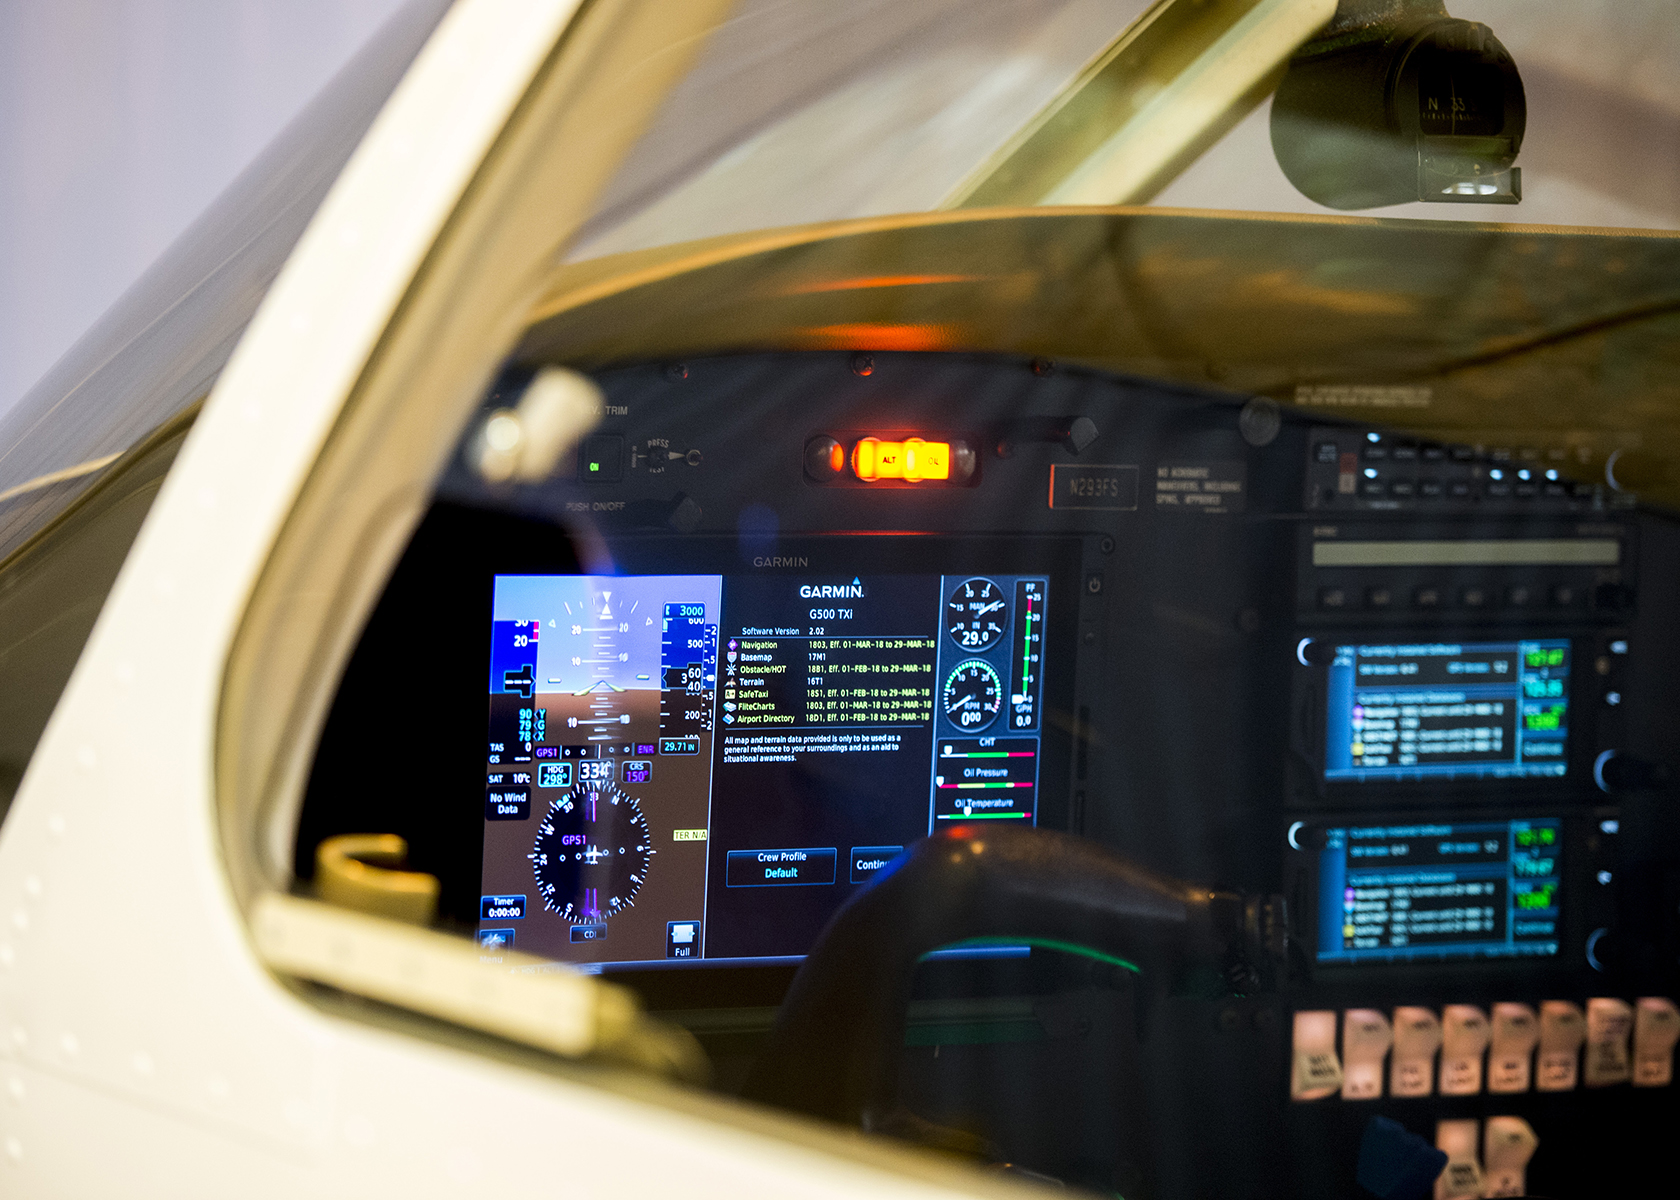 Control panel of Piper Arrow aircraft